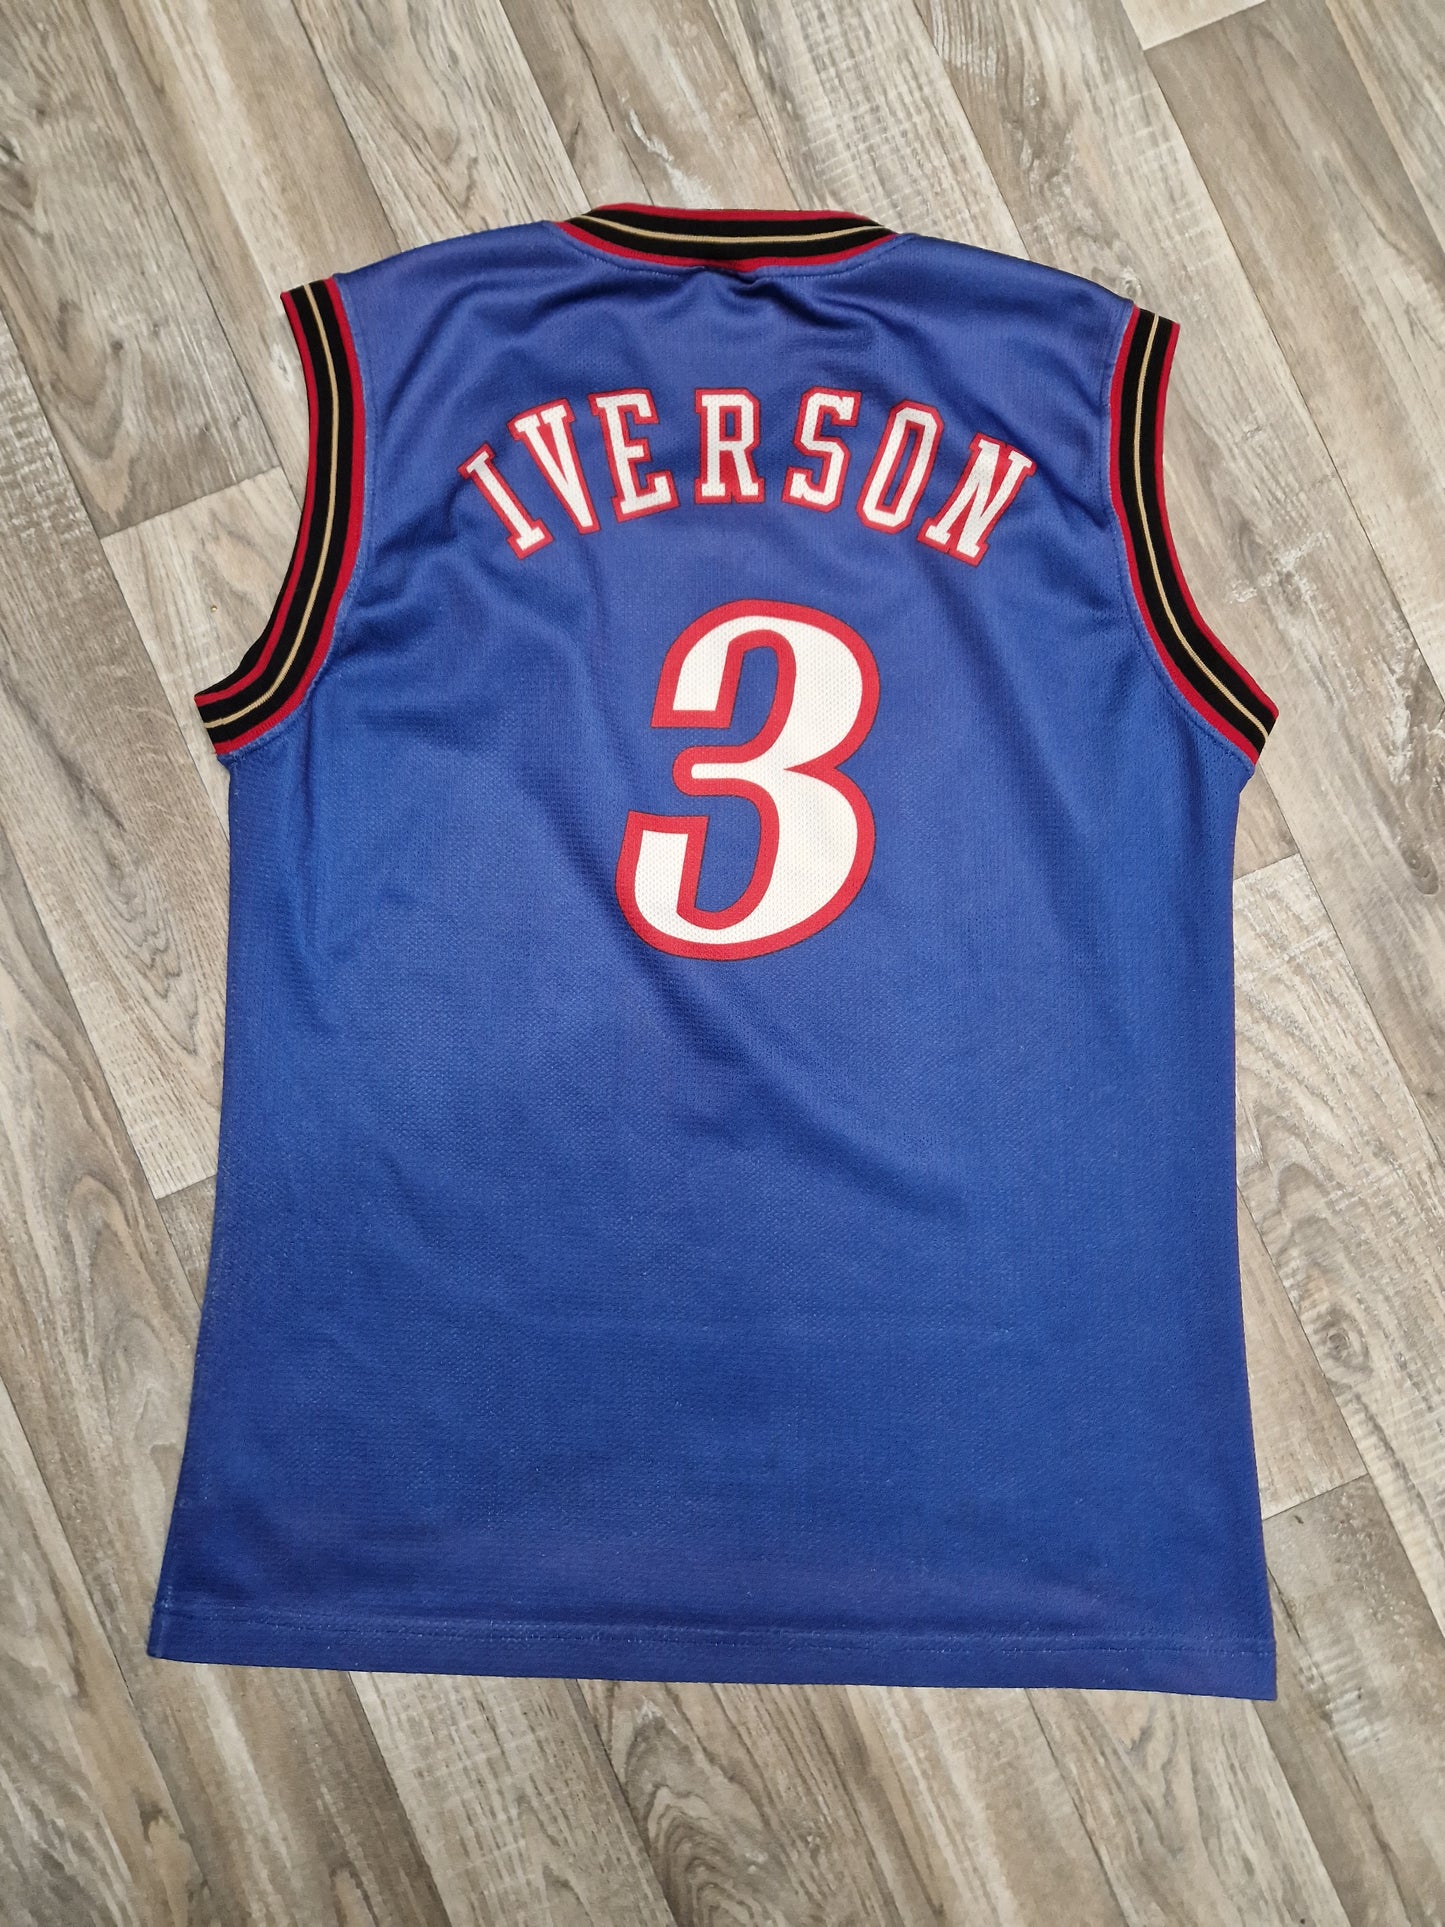 Allen Iverson Philadelphia 76ers Jersey Size Medium